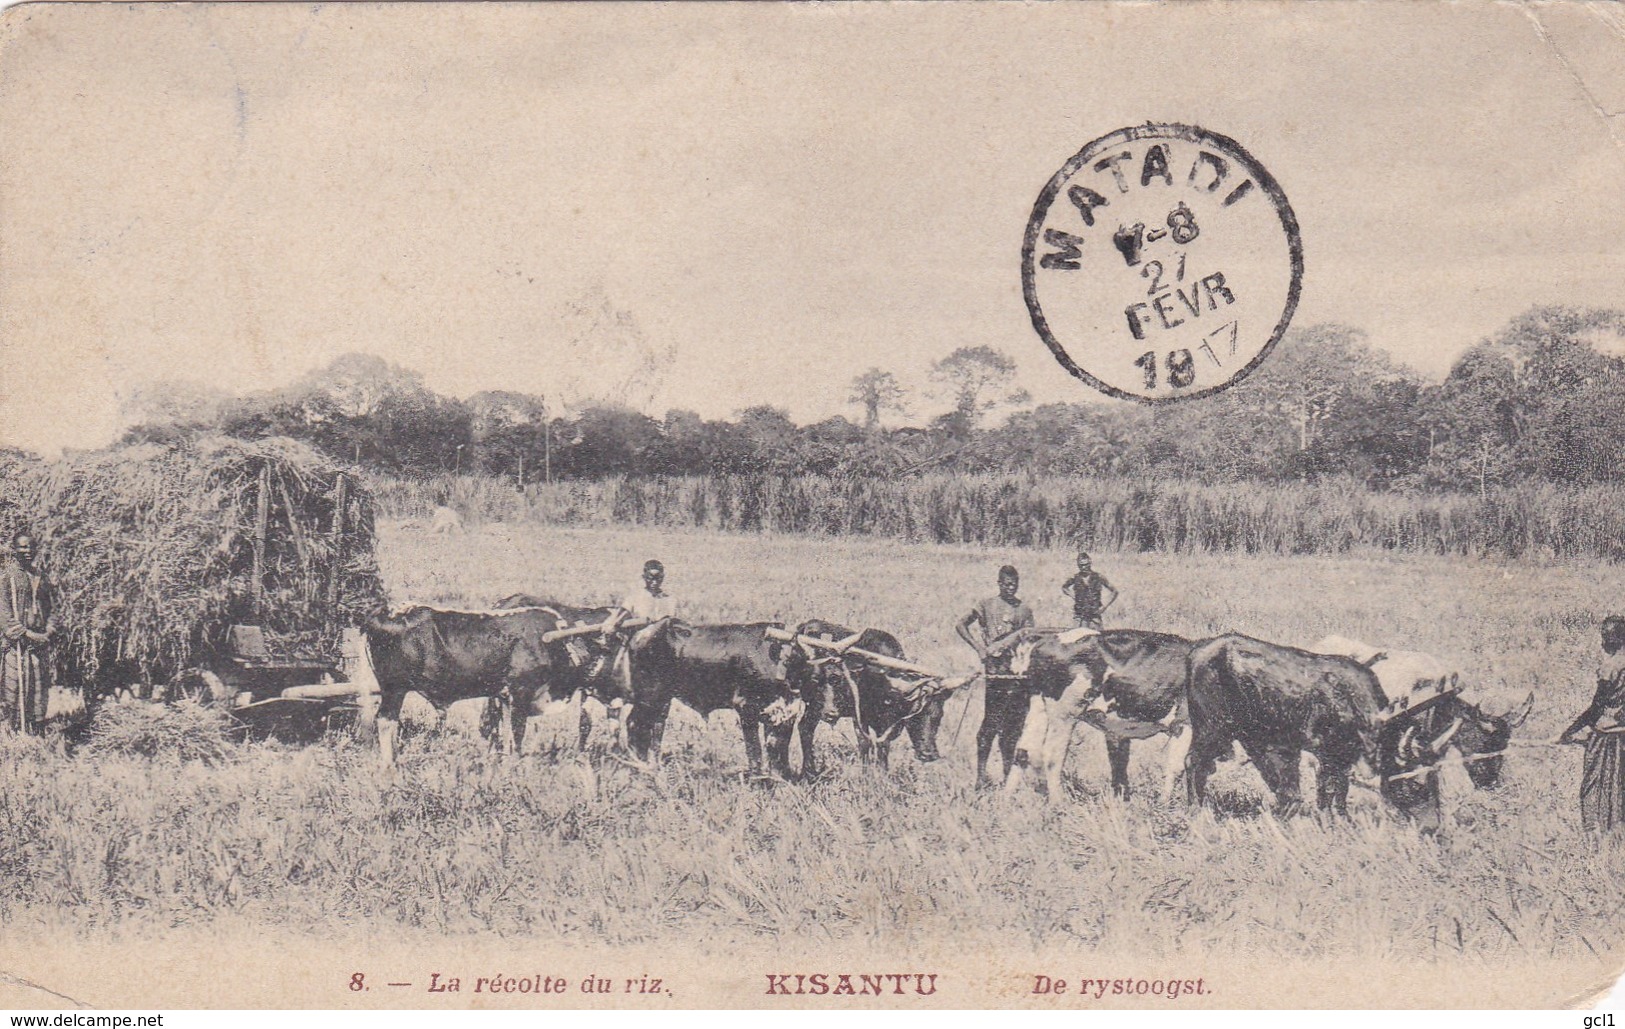 Kisantu - Rijstoogst - Belgian Congo